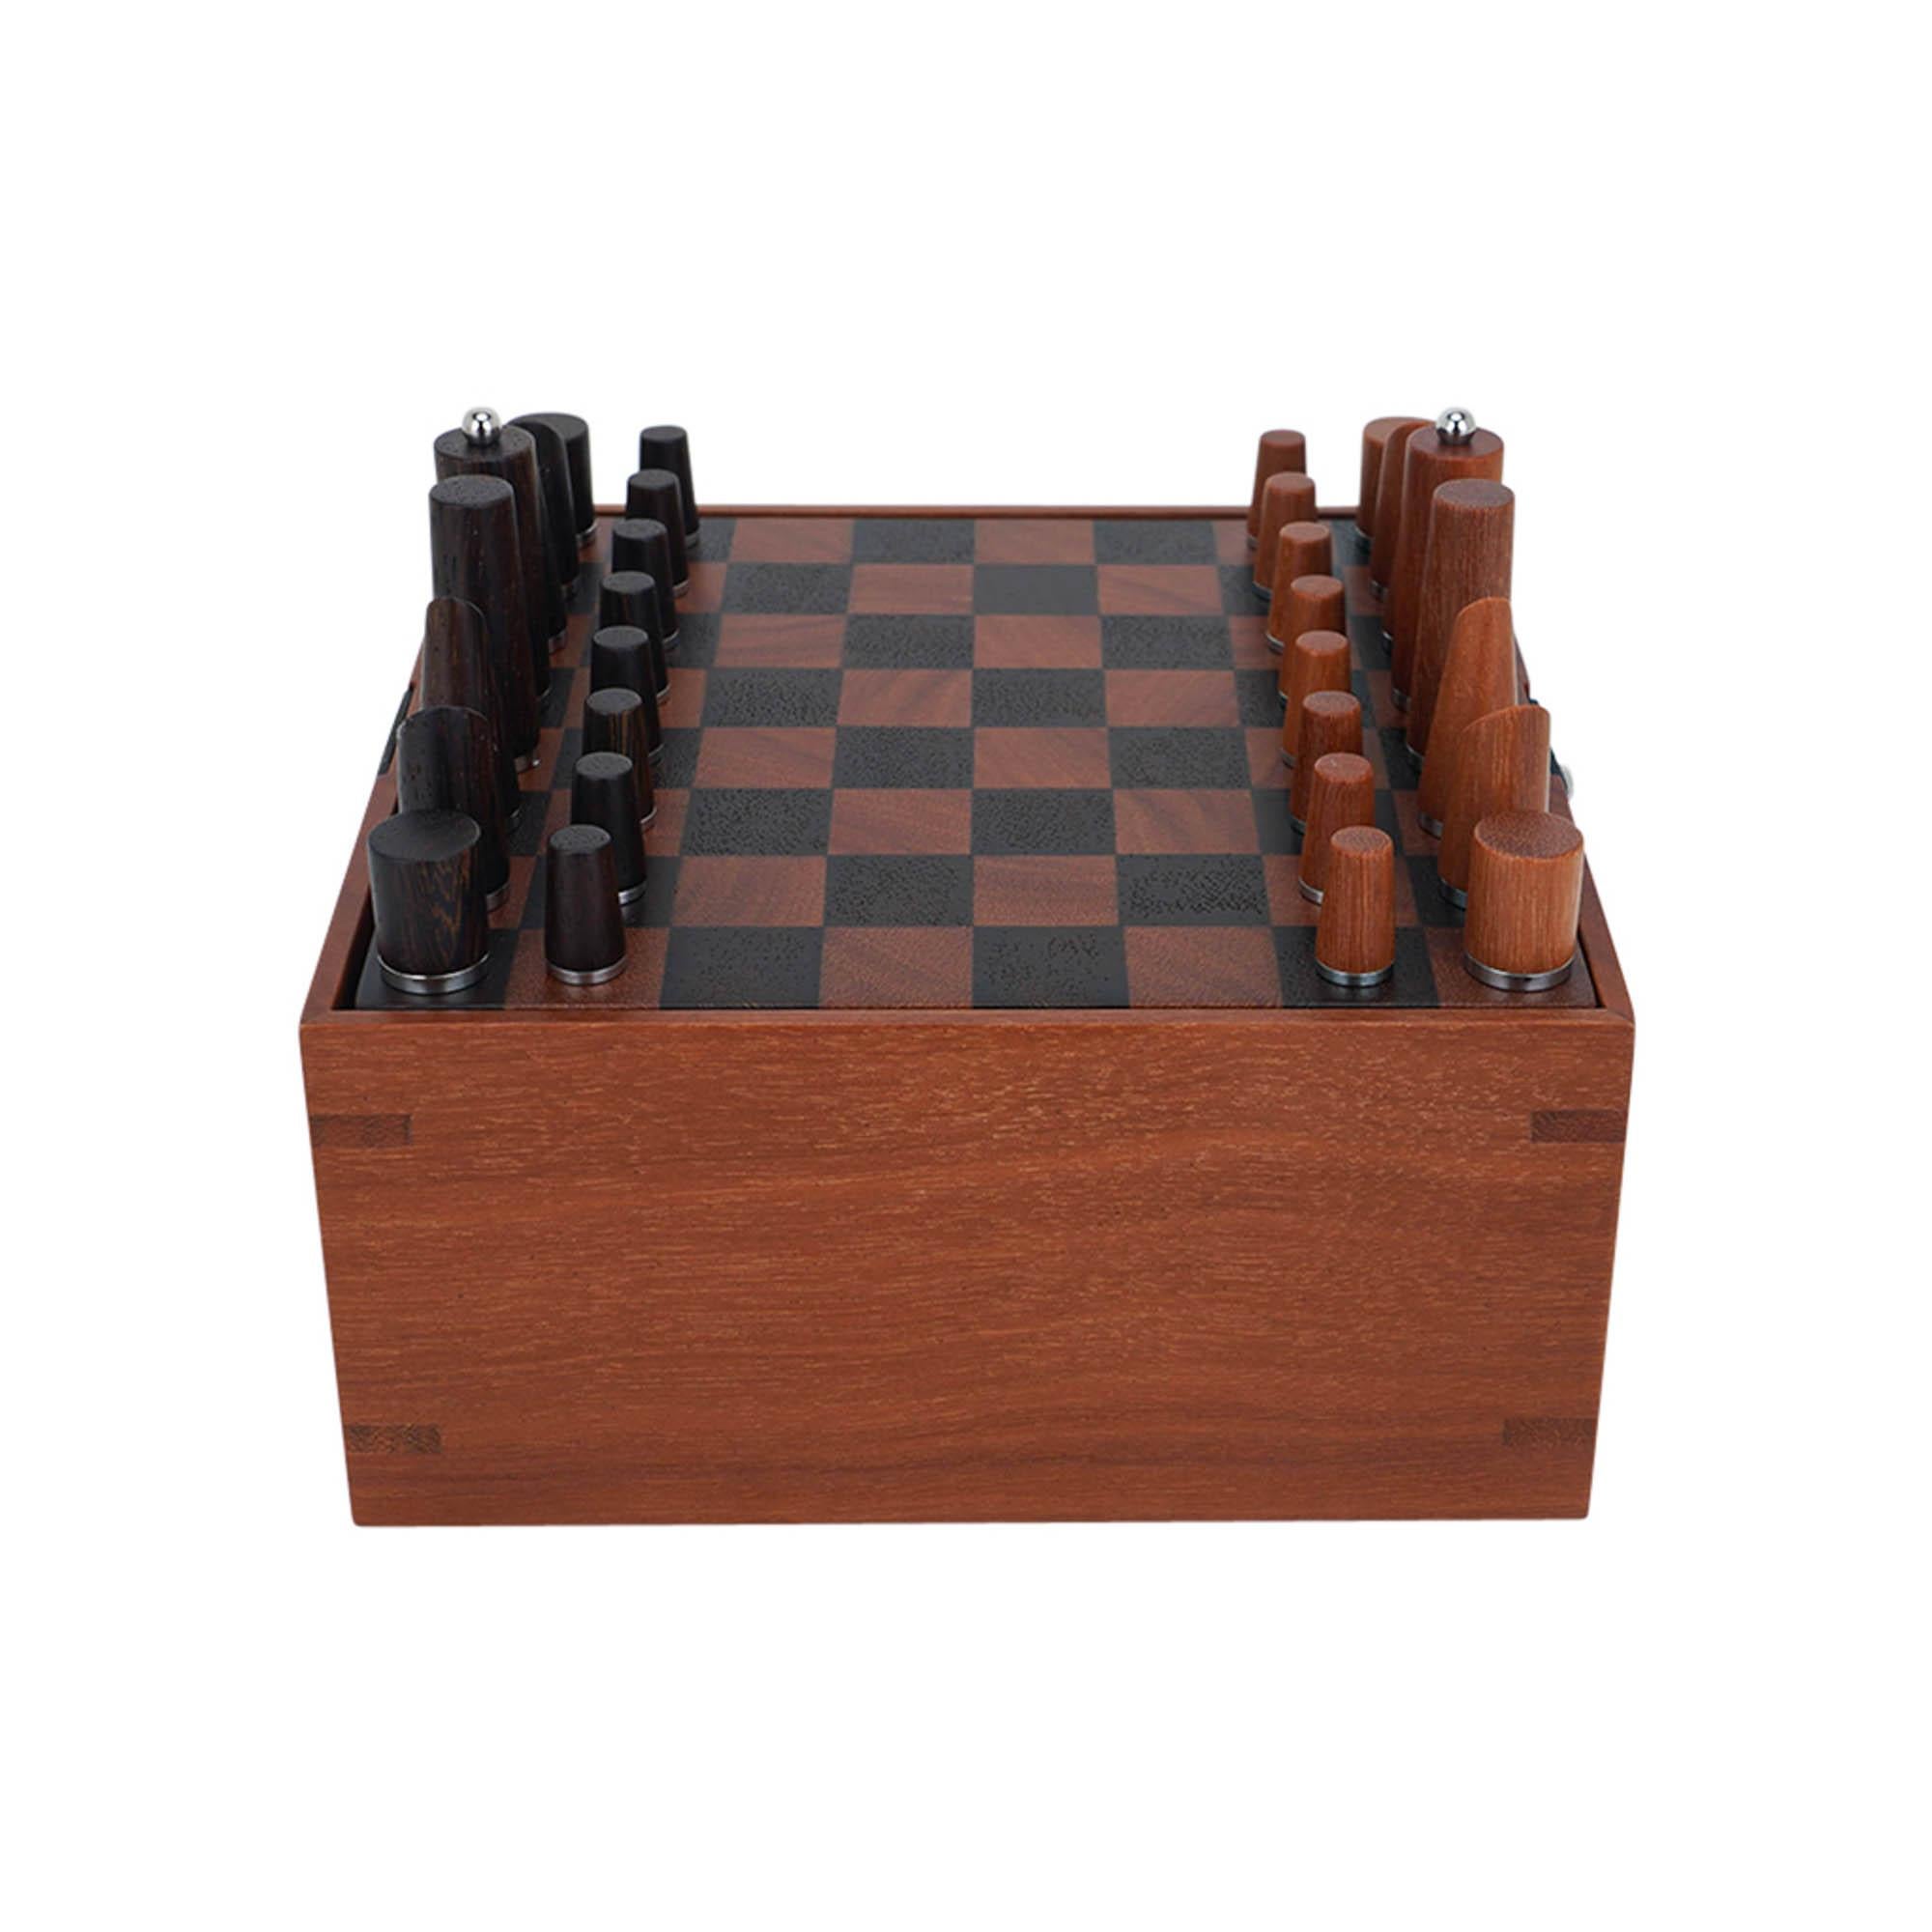 indigo chess set